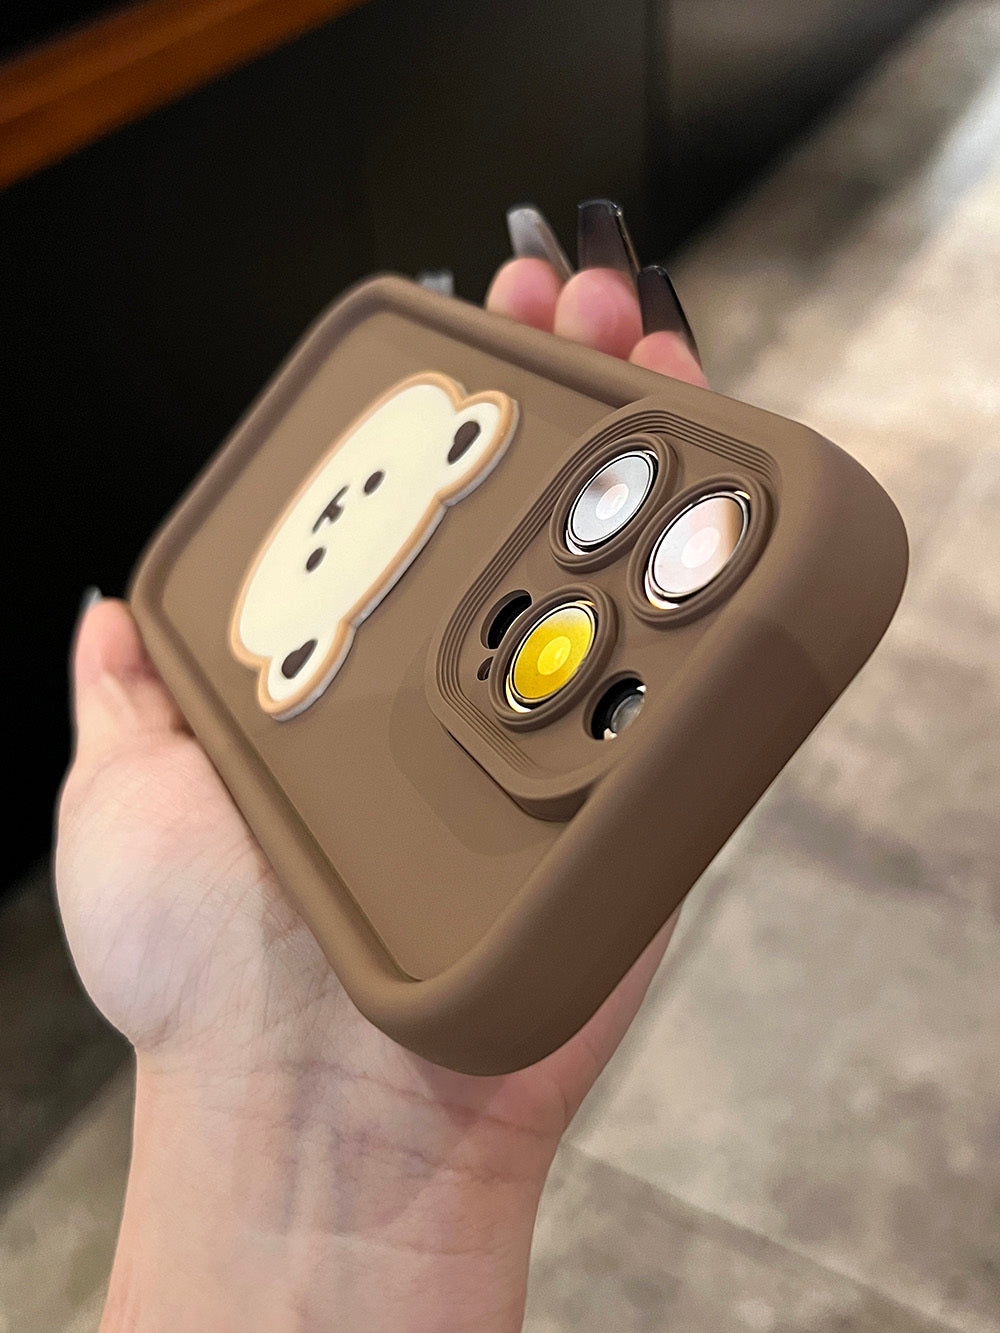 Cartoon Bear Soft Silicone Phone Protector